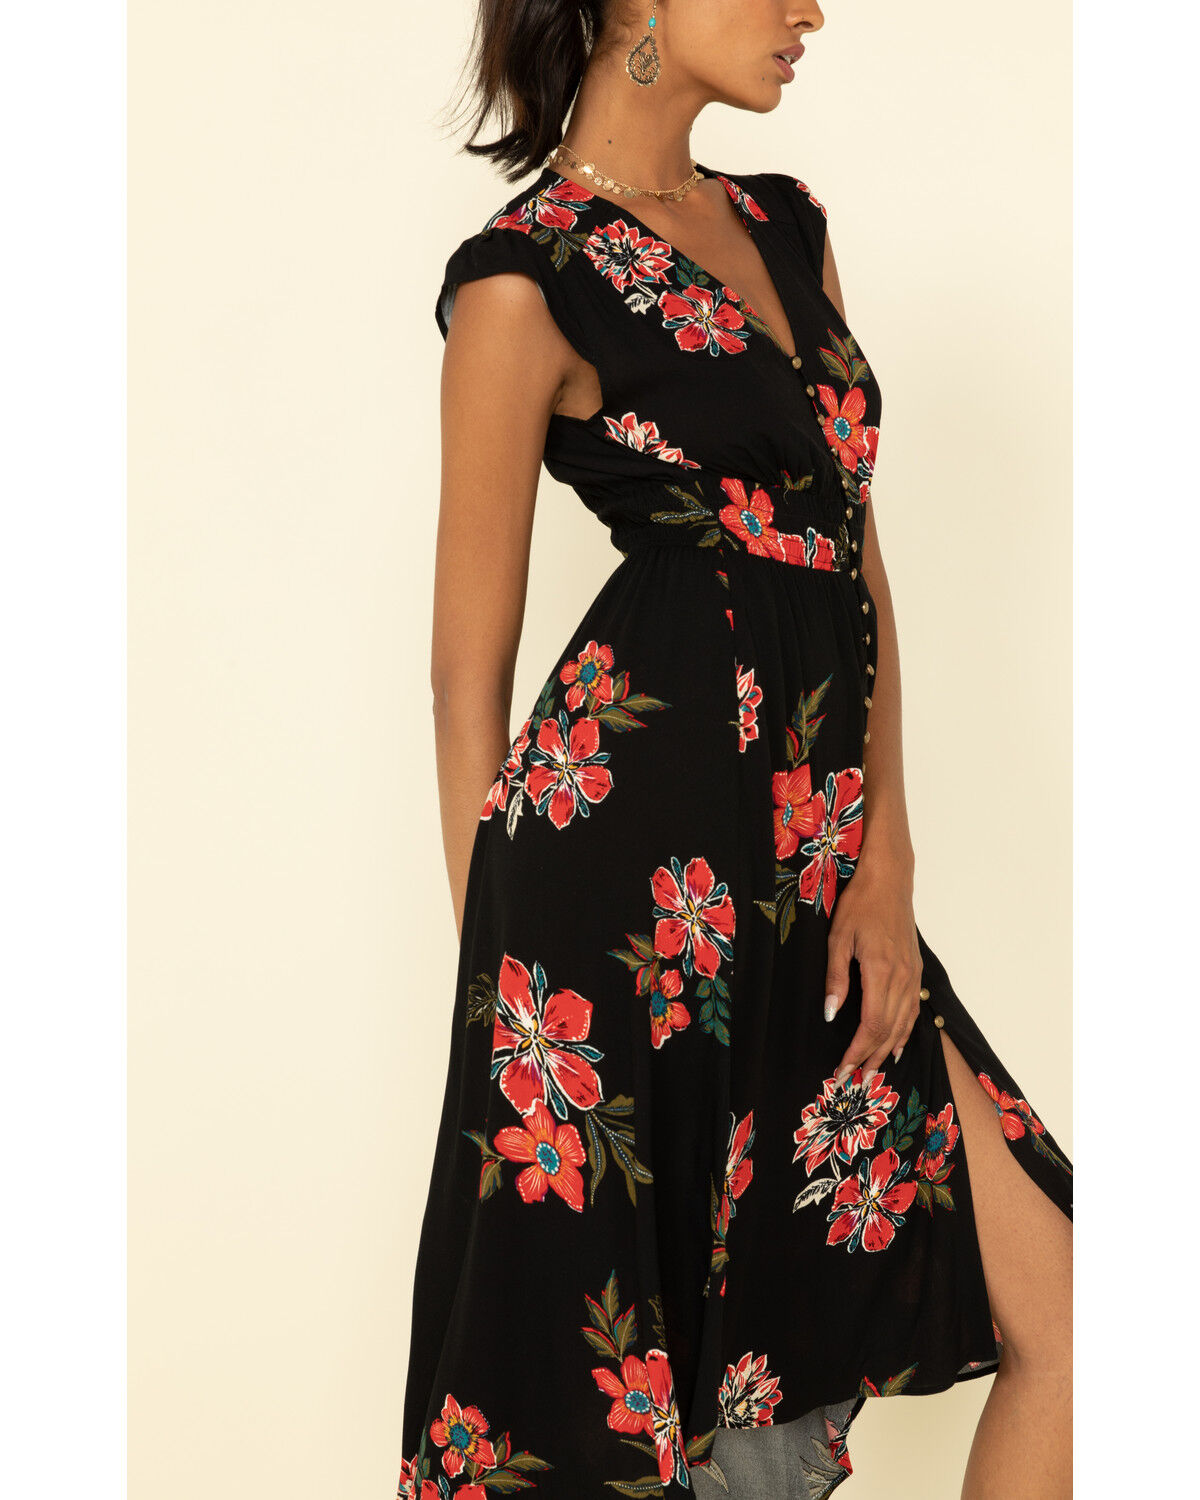 womens black floral dress